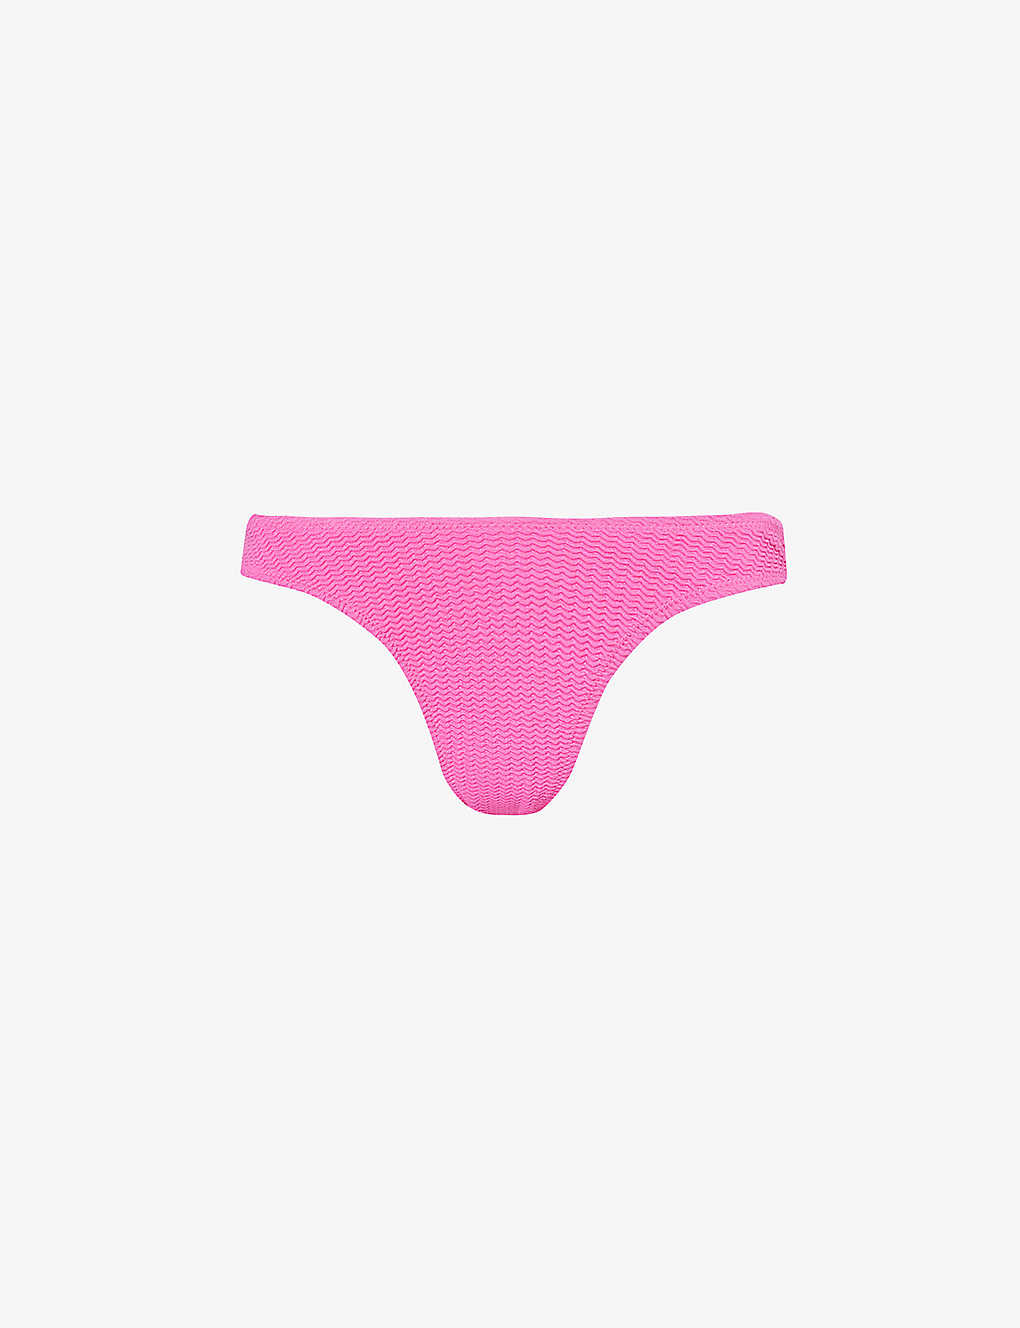 Shop Seafolly Women's Fuchsia Rose Sea Dive Textured Bikini Bottoms